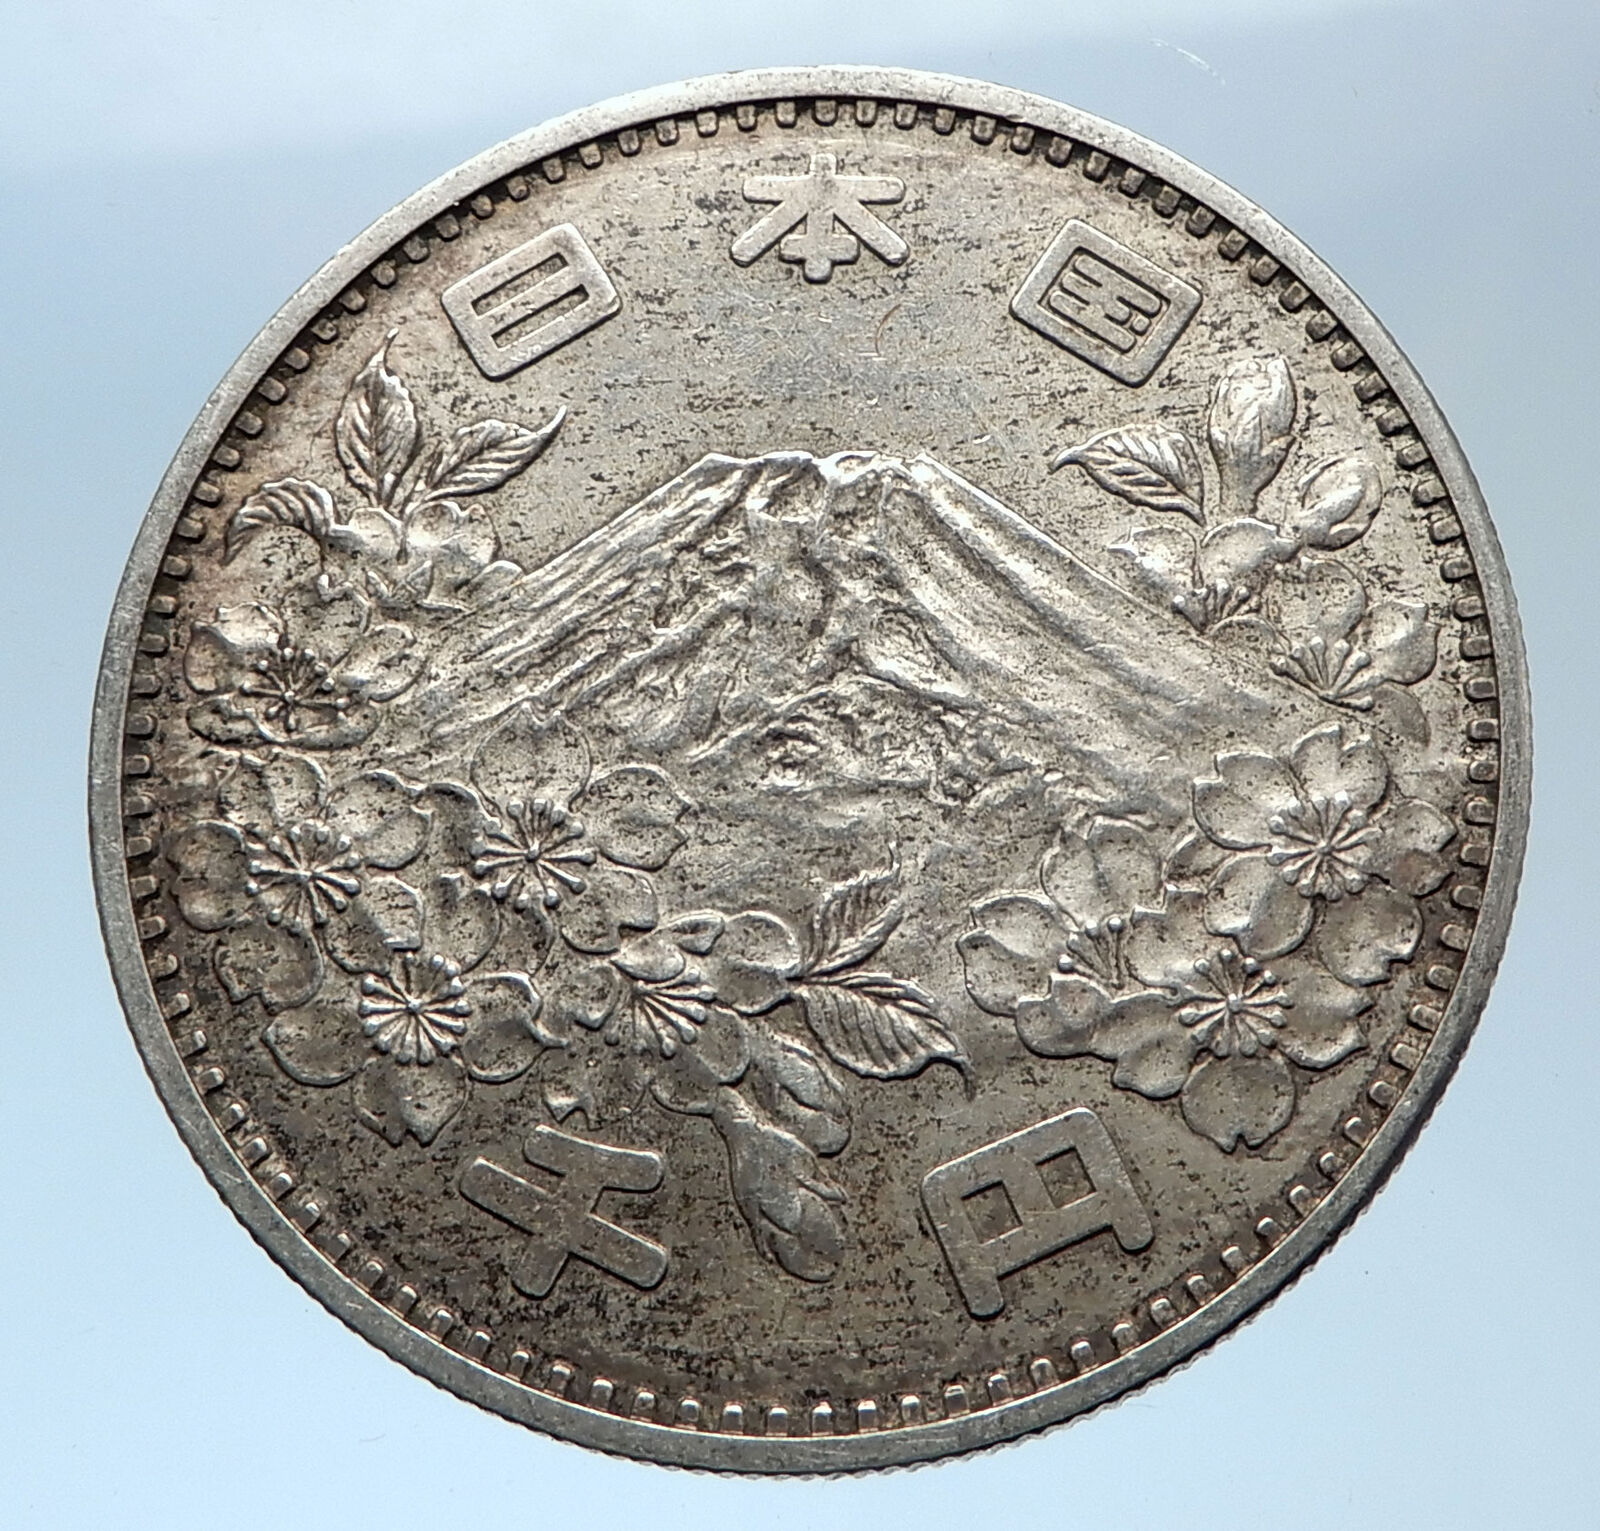 1964 JAPAN Tokyo Summer Olympic Games 3.5cm Silver Japanese MT FUJI Coin i73973